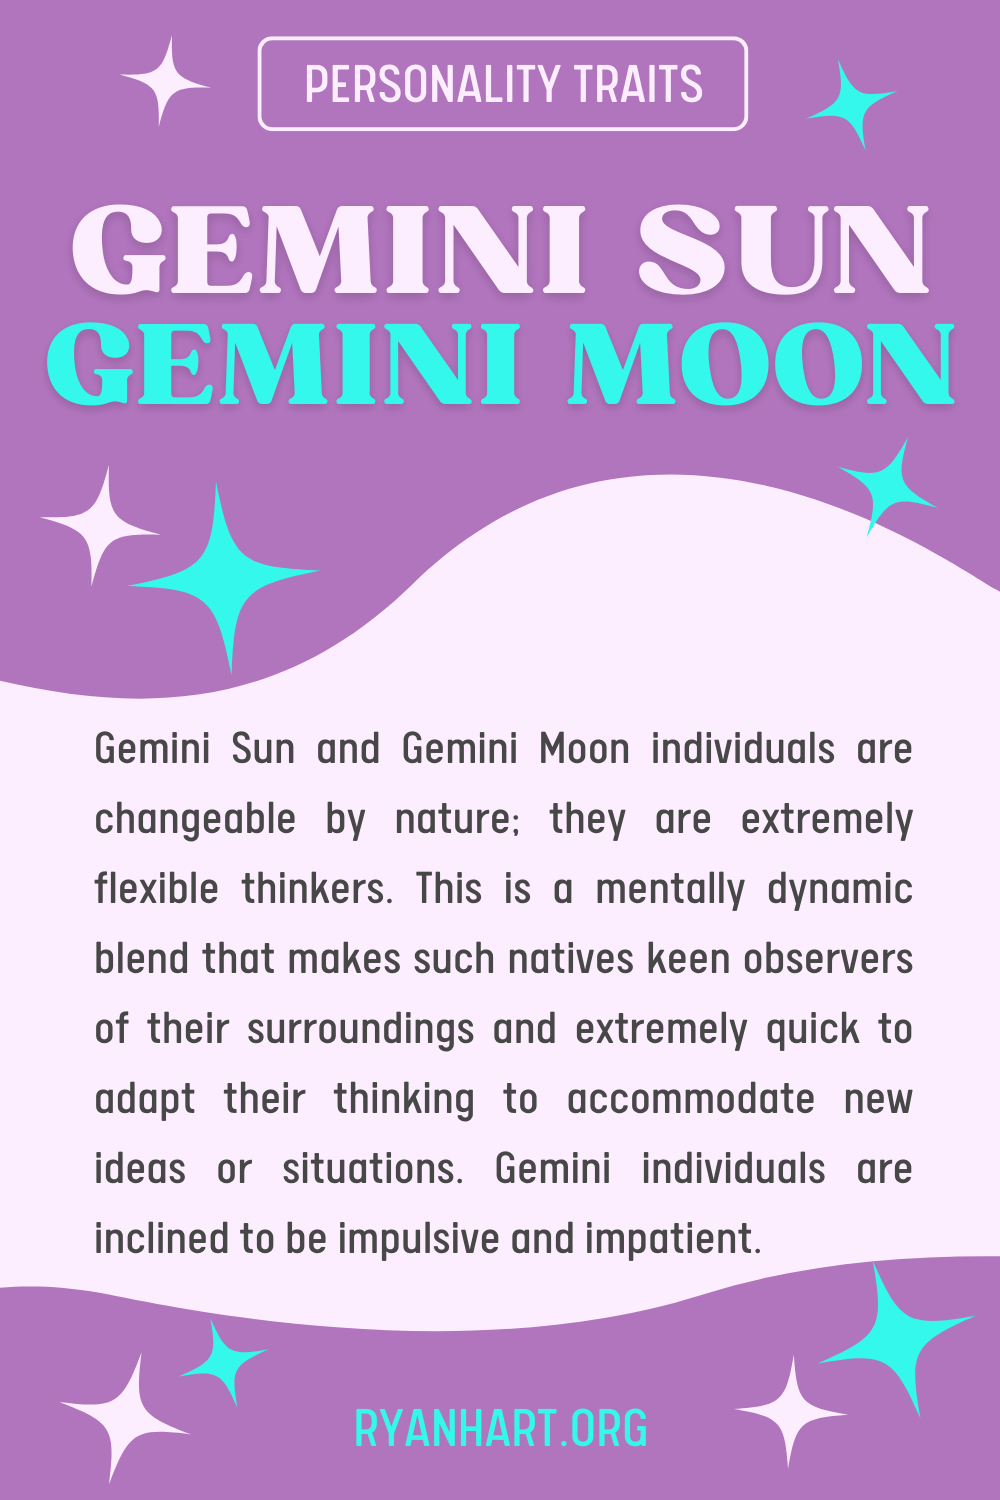 Gemini Sun Gemini Moon Description